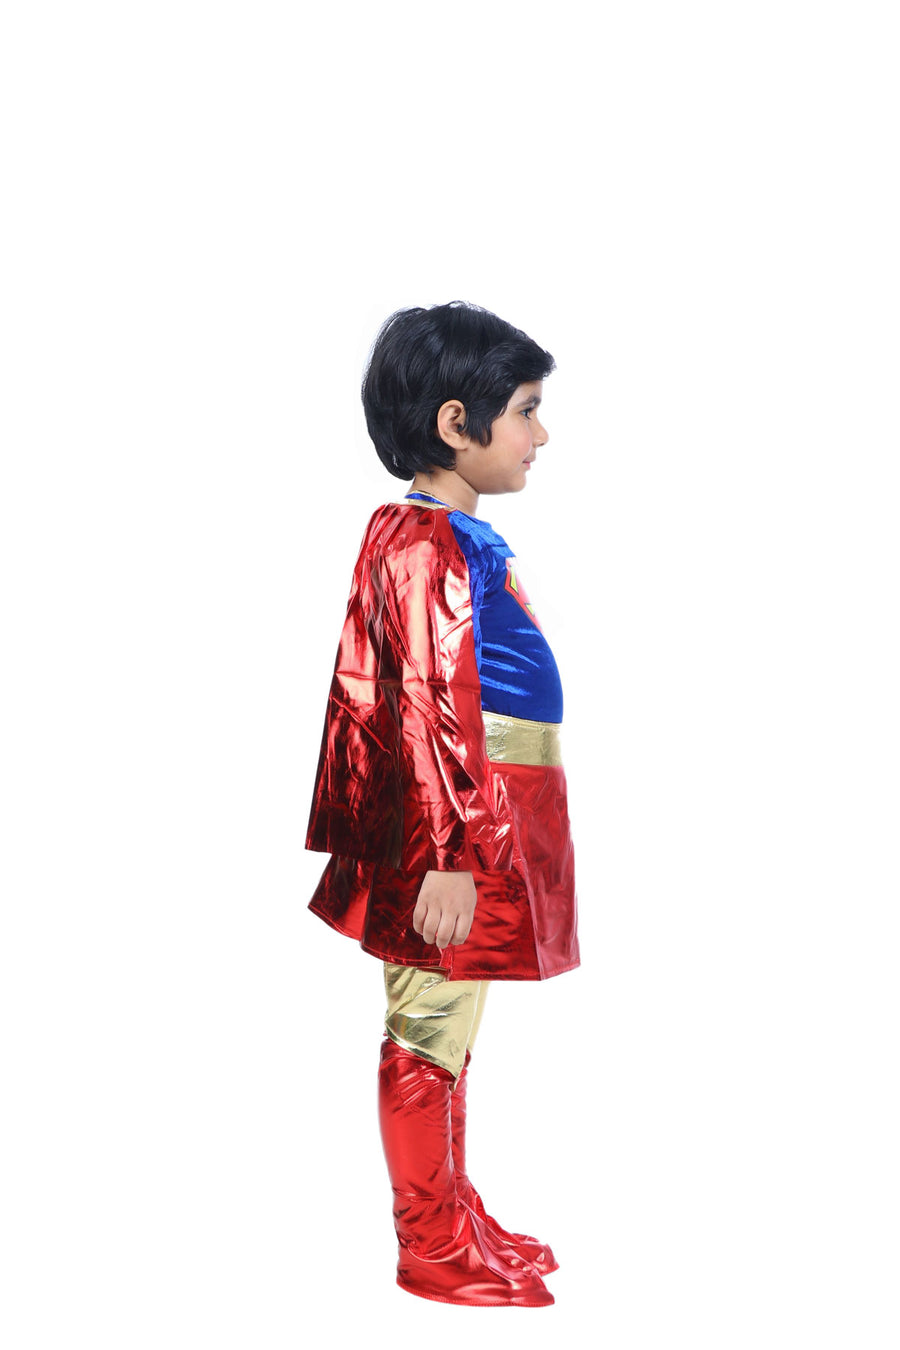 Supergirl Comic Movie Superhero Fancy Dress Costume for Kids - Imported